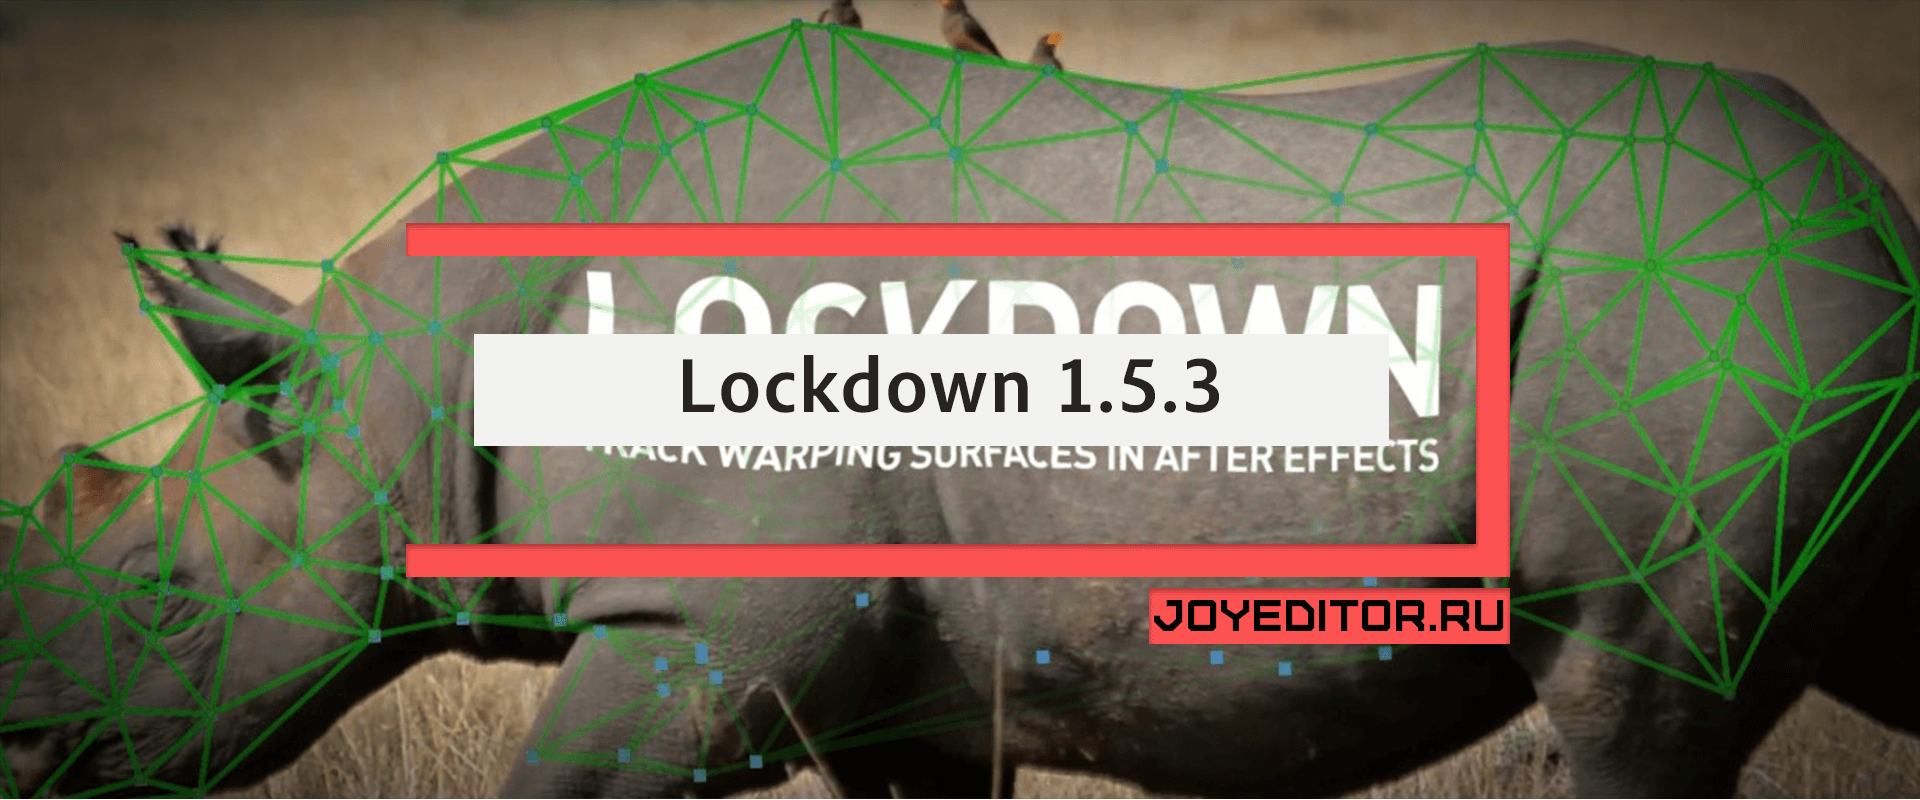 Lockdown 1.5.3